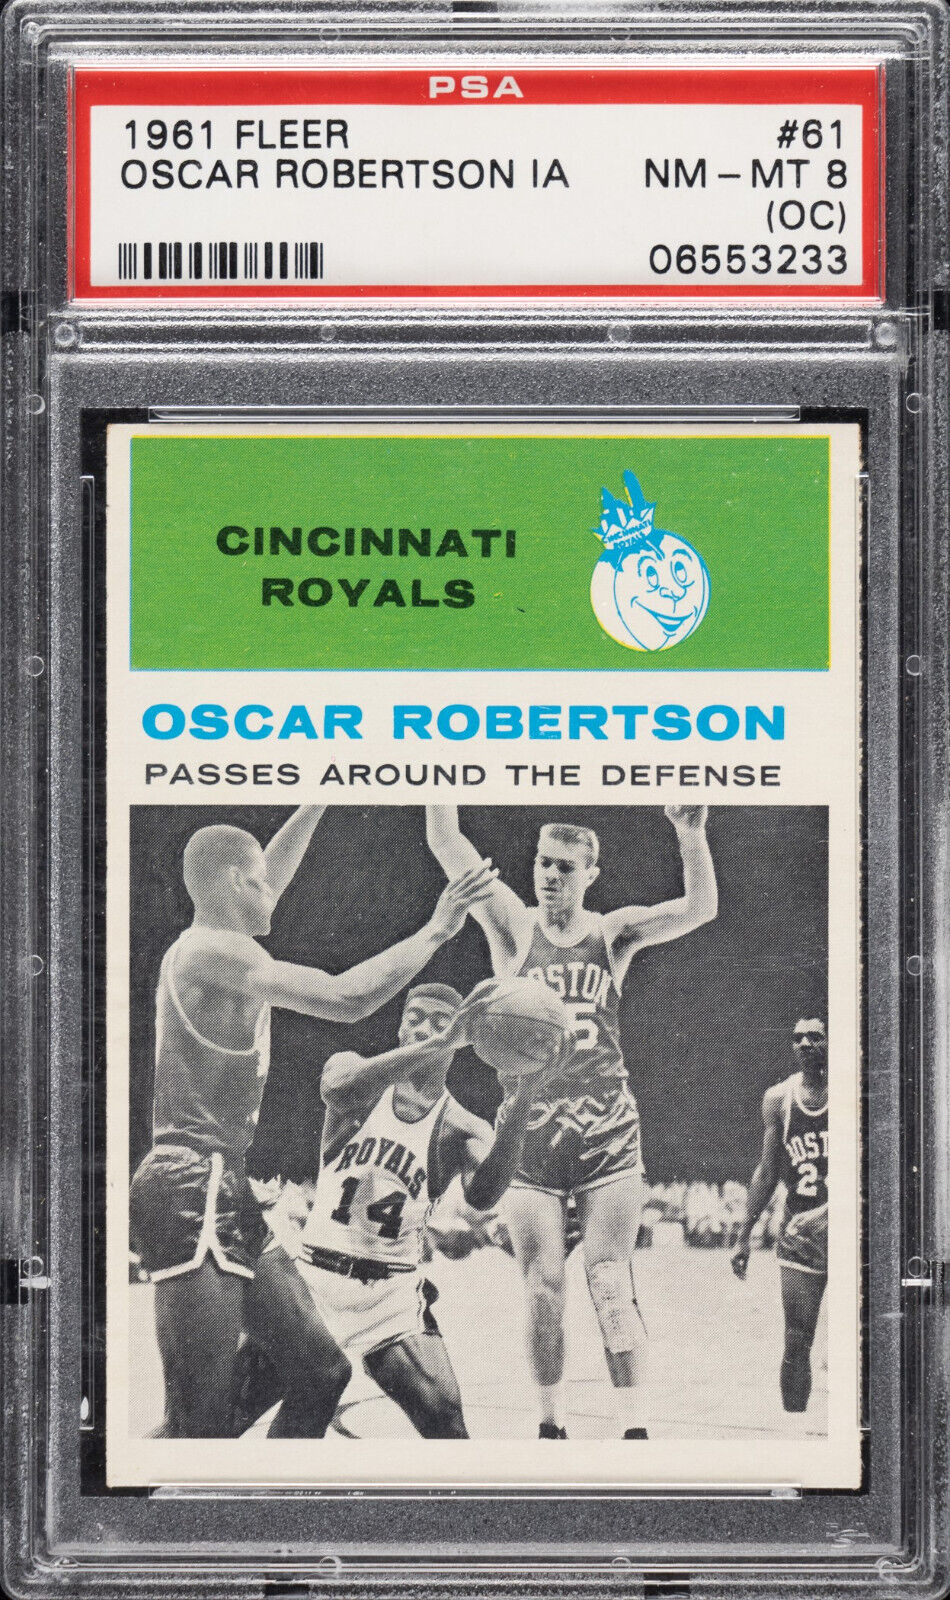 PSA 8 - OSCAR ROBERTSON 1961 FLEER ROOKIE IA CARD #61 NMT/MT - CINCINNATI ROYALS